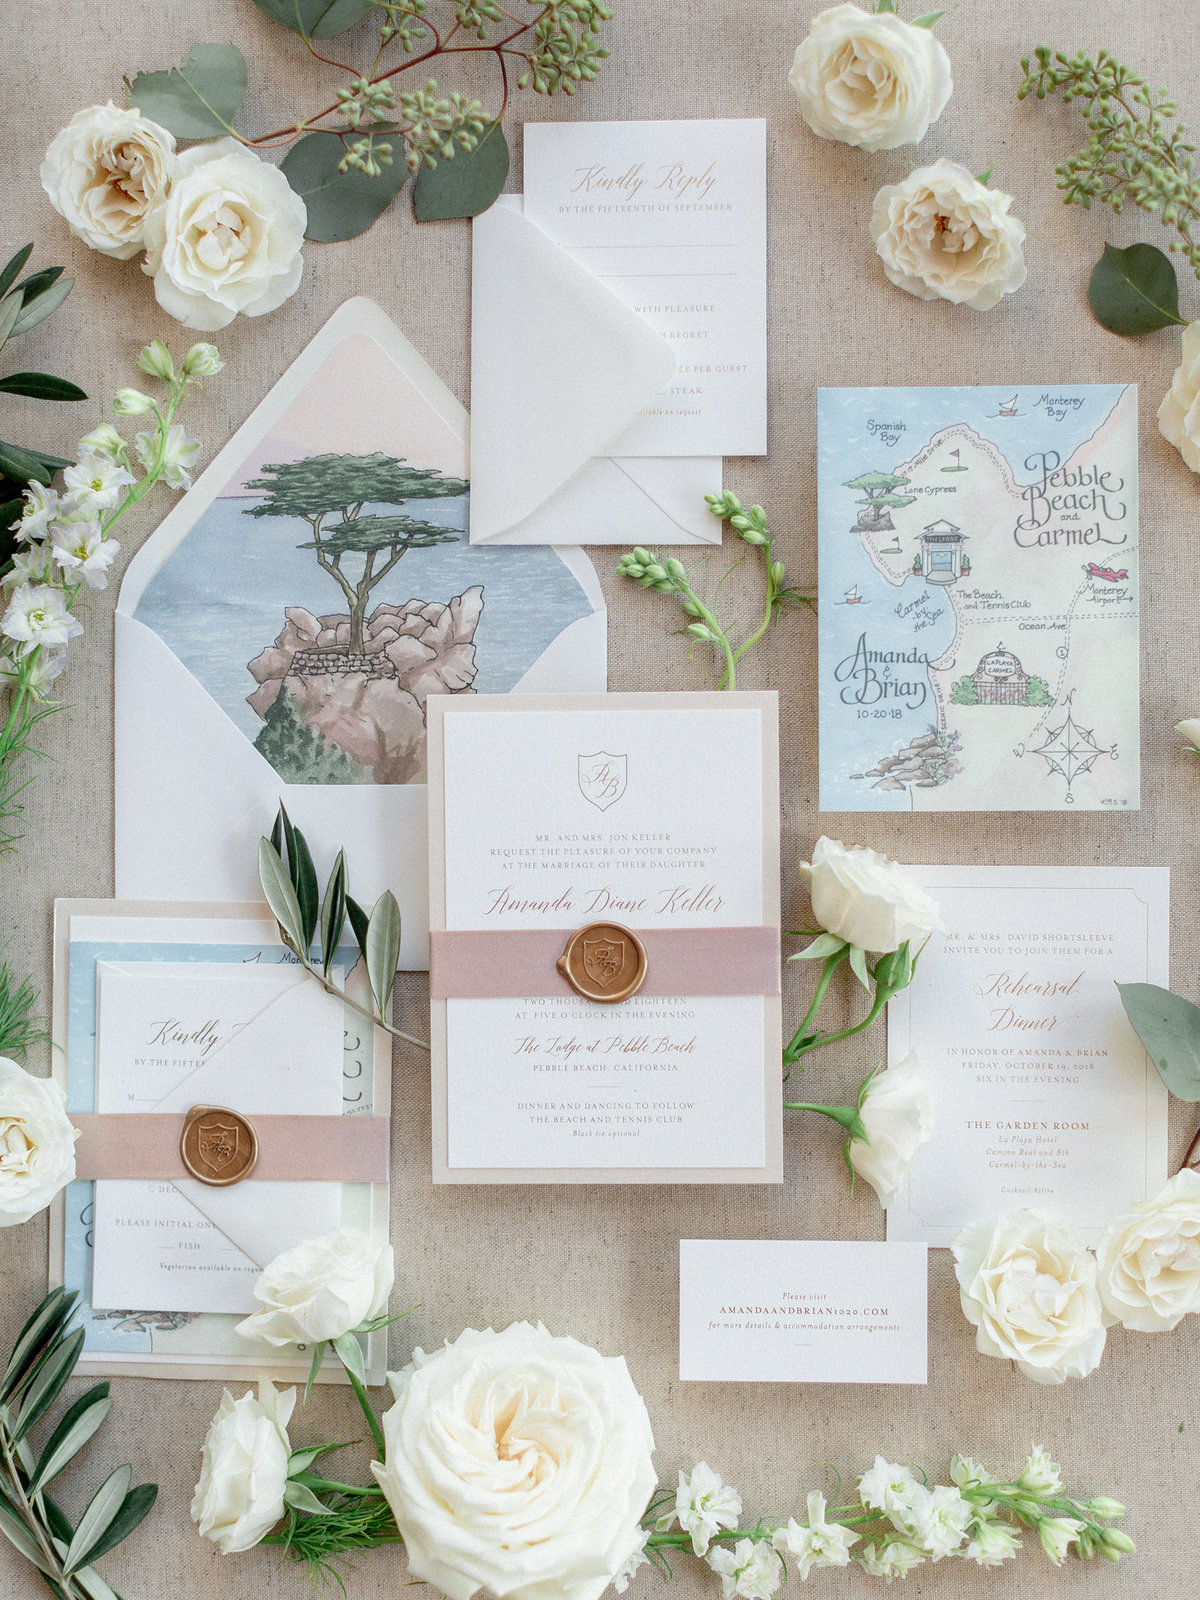 WeddingInvitations-PaperByTheBay-PebbleBeach-LarissaCleveland-030